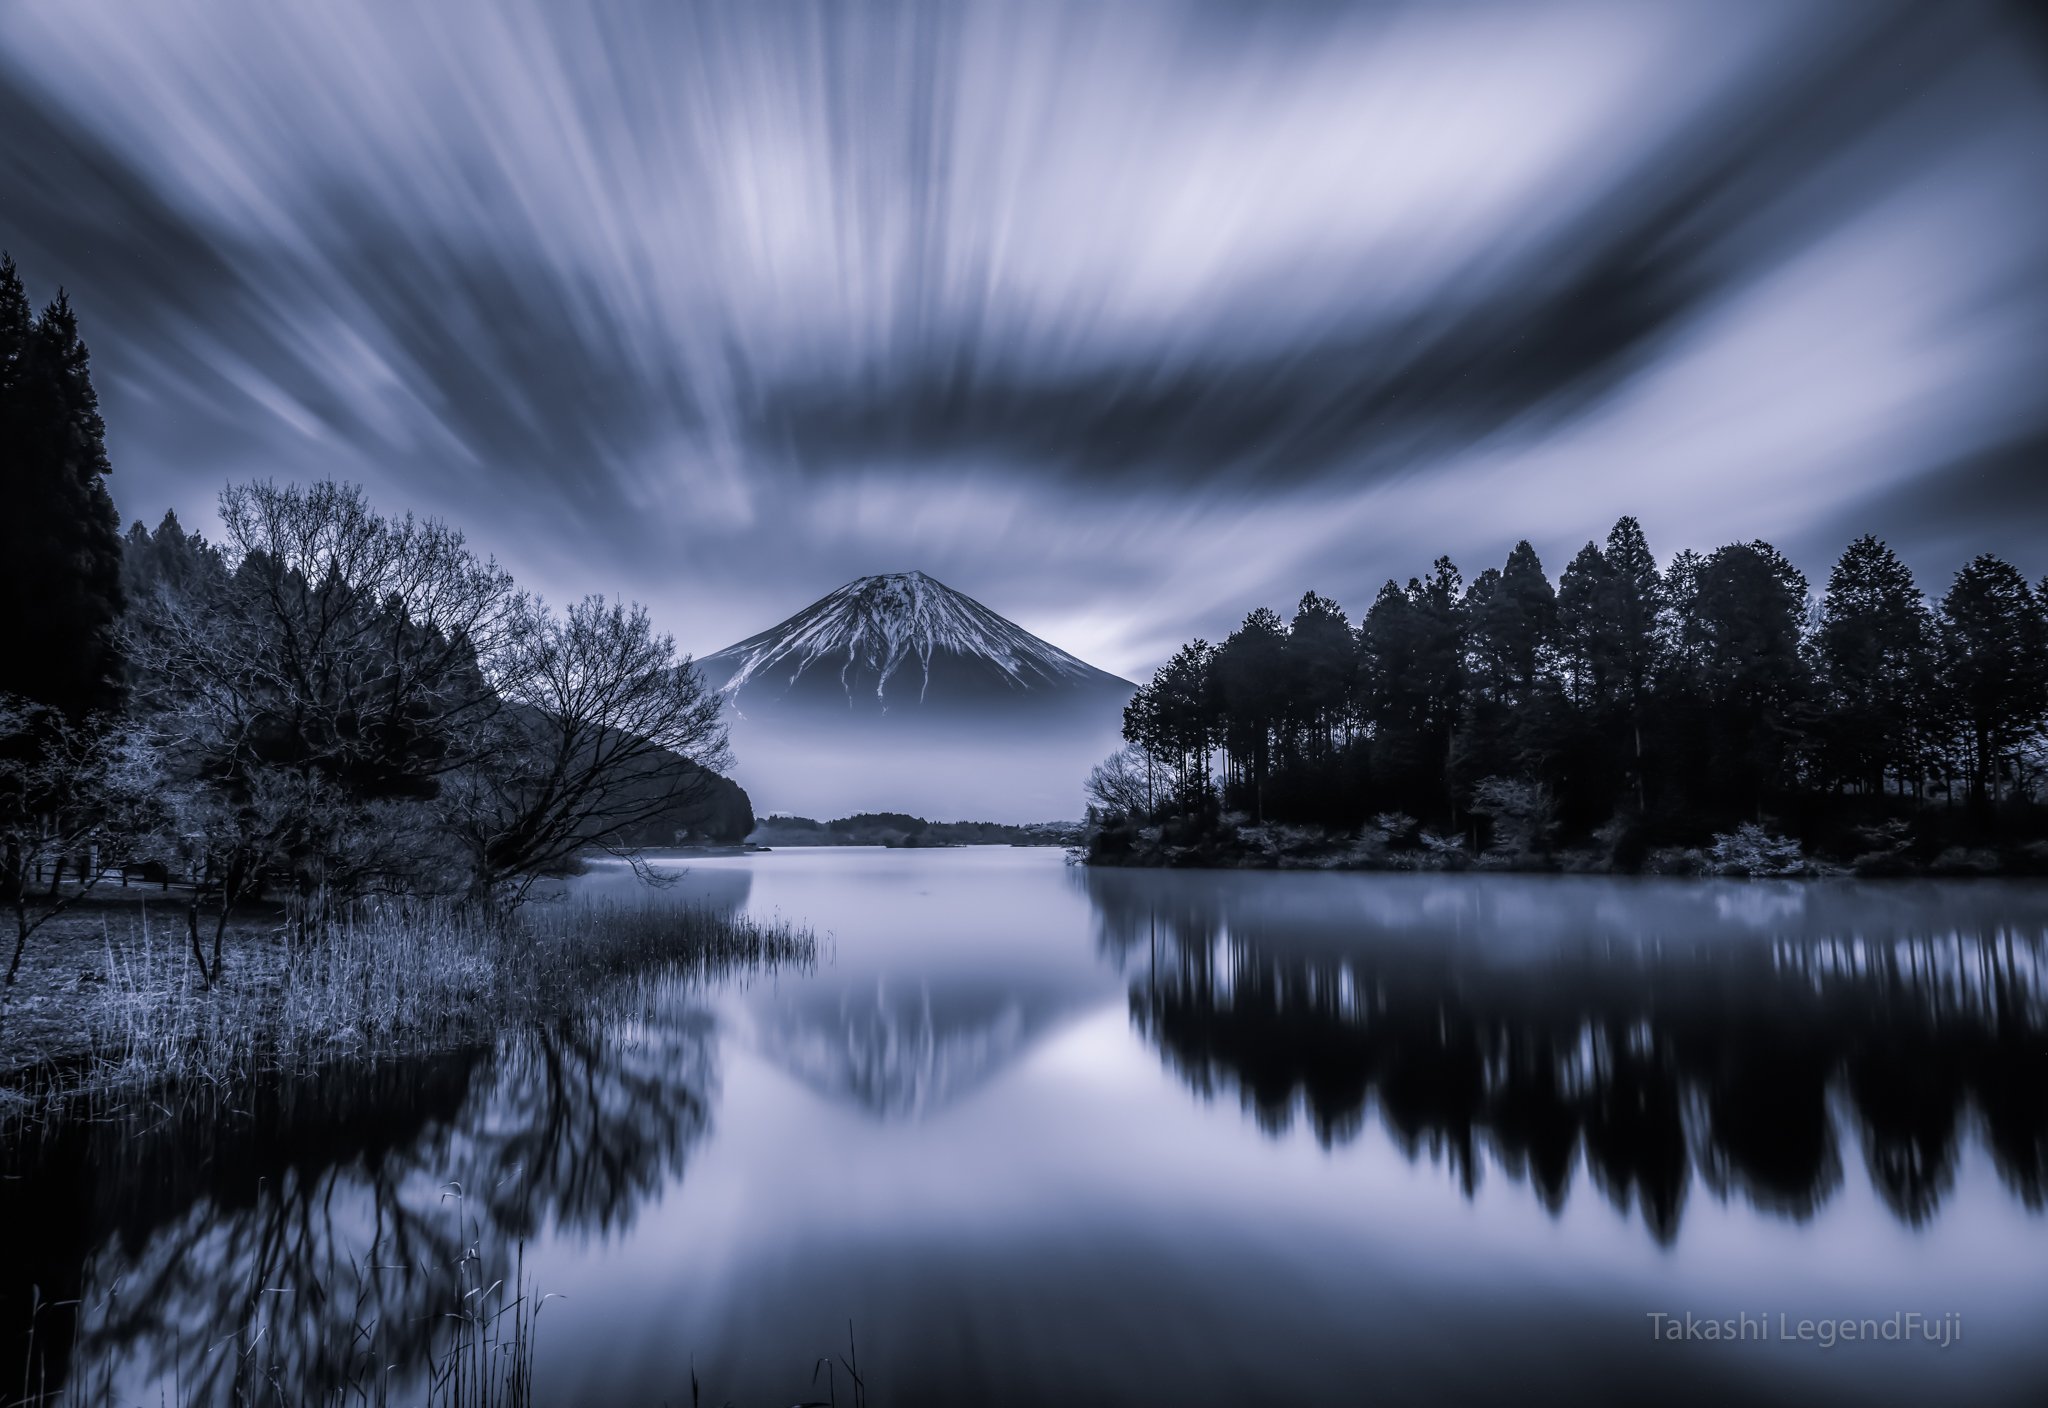 fuji,mountain,japan,clouds,lake,water,reflection,landscapes,trees,flow,mirror,amazing,beautiful,wonderful,, Takashi